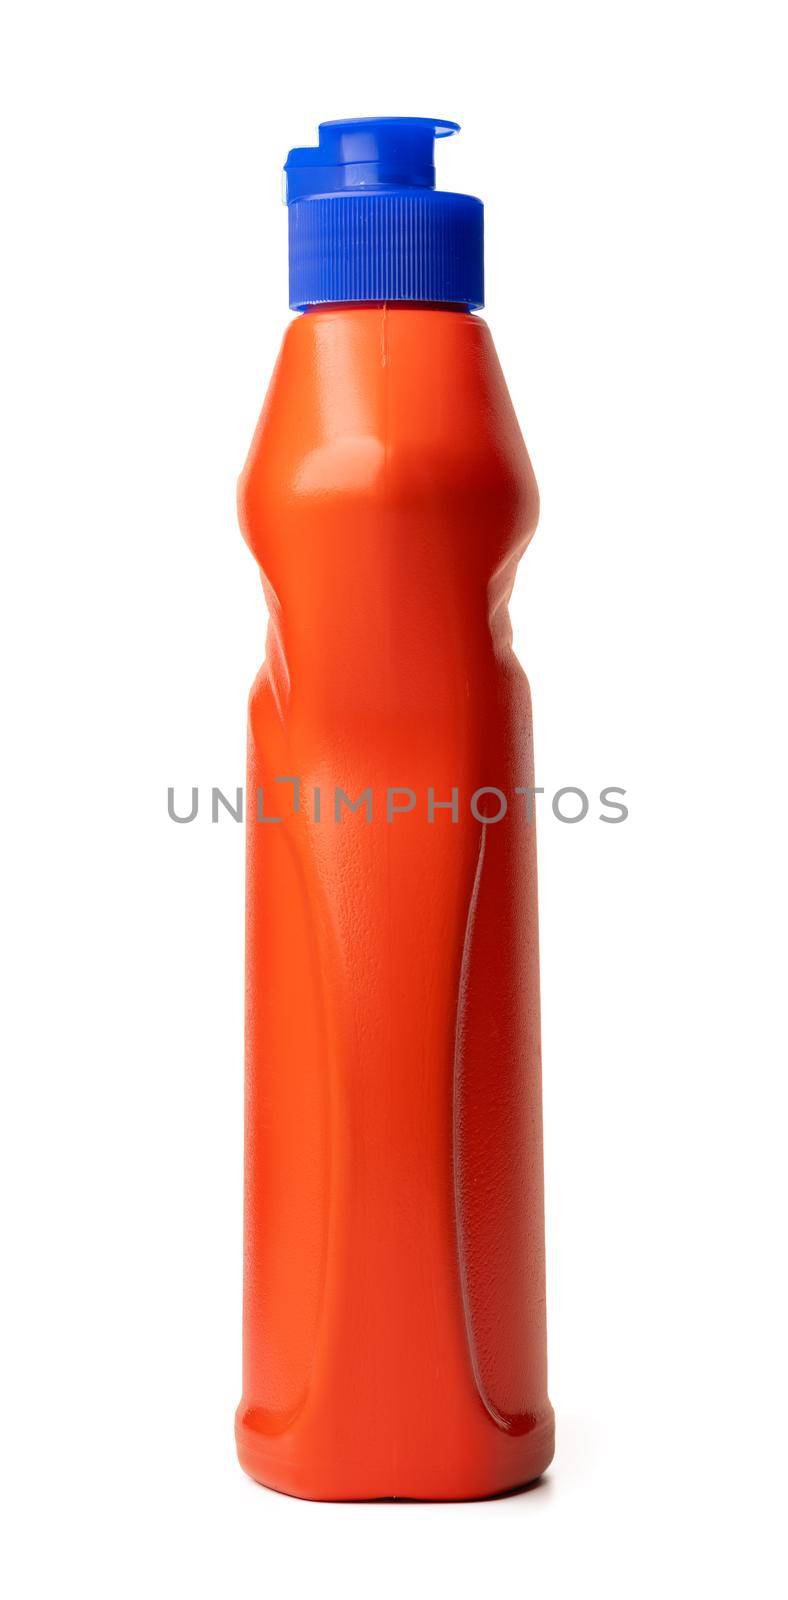 Orange plastic bottle of liquid detergent isolated on white by Fabrikasimf